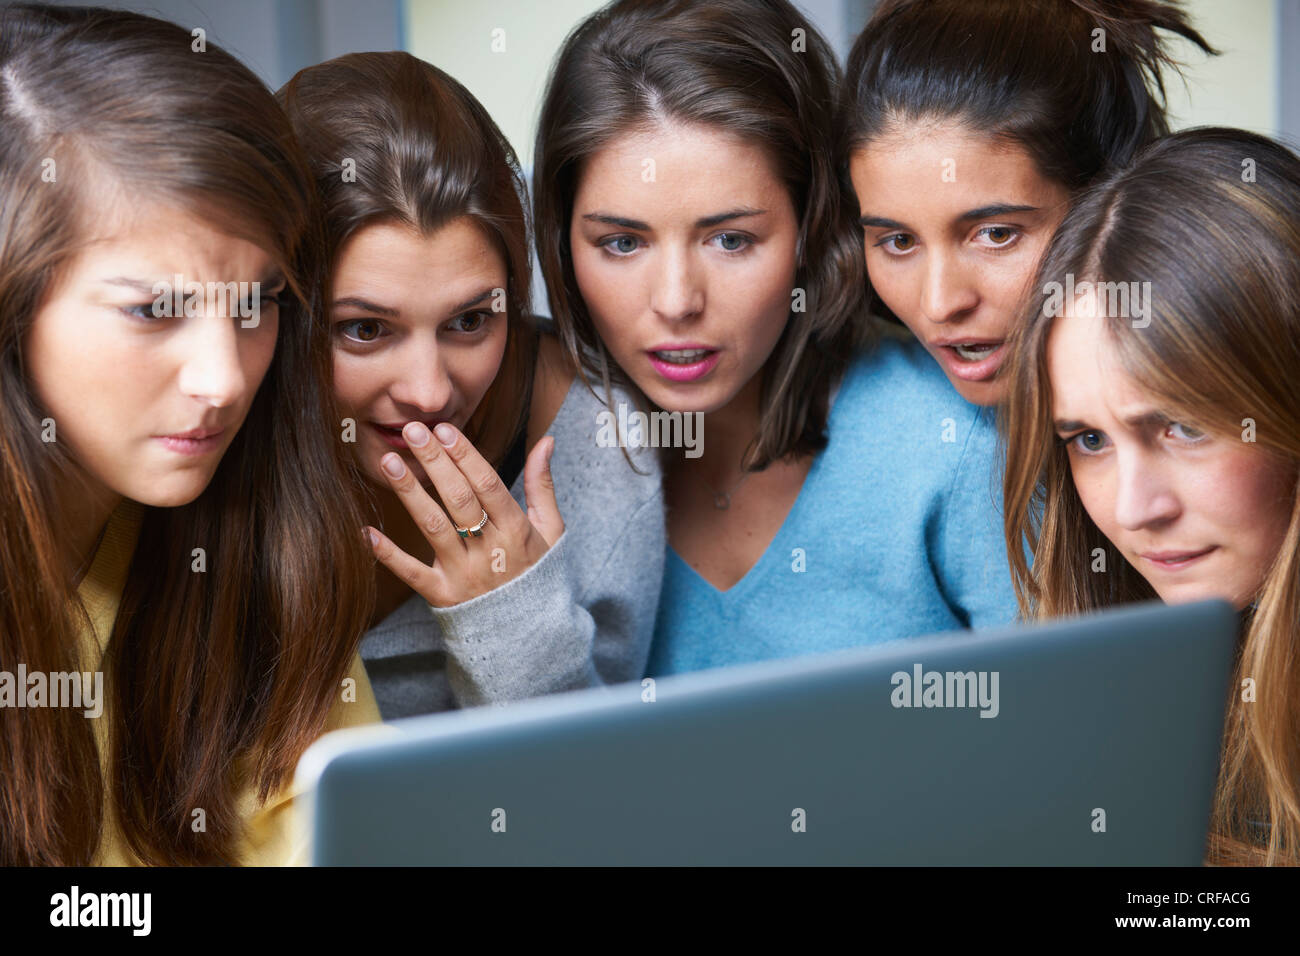 Shocked women using laptop together Stock Photo